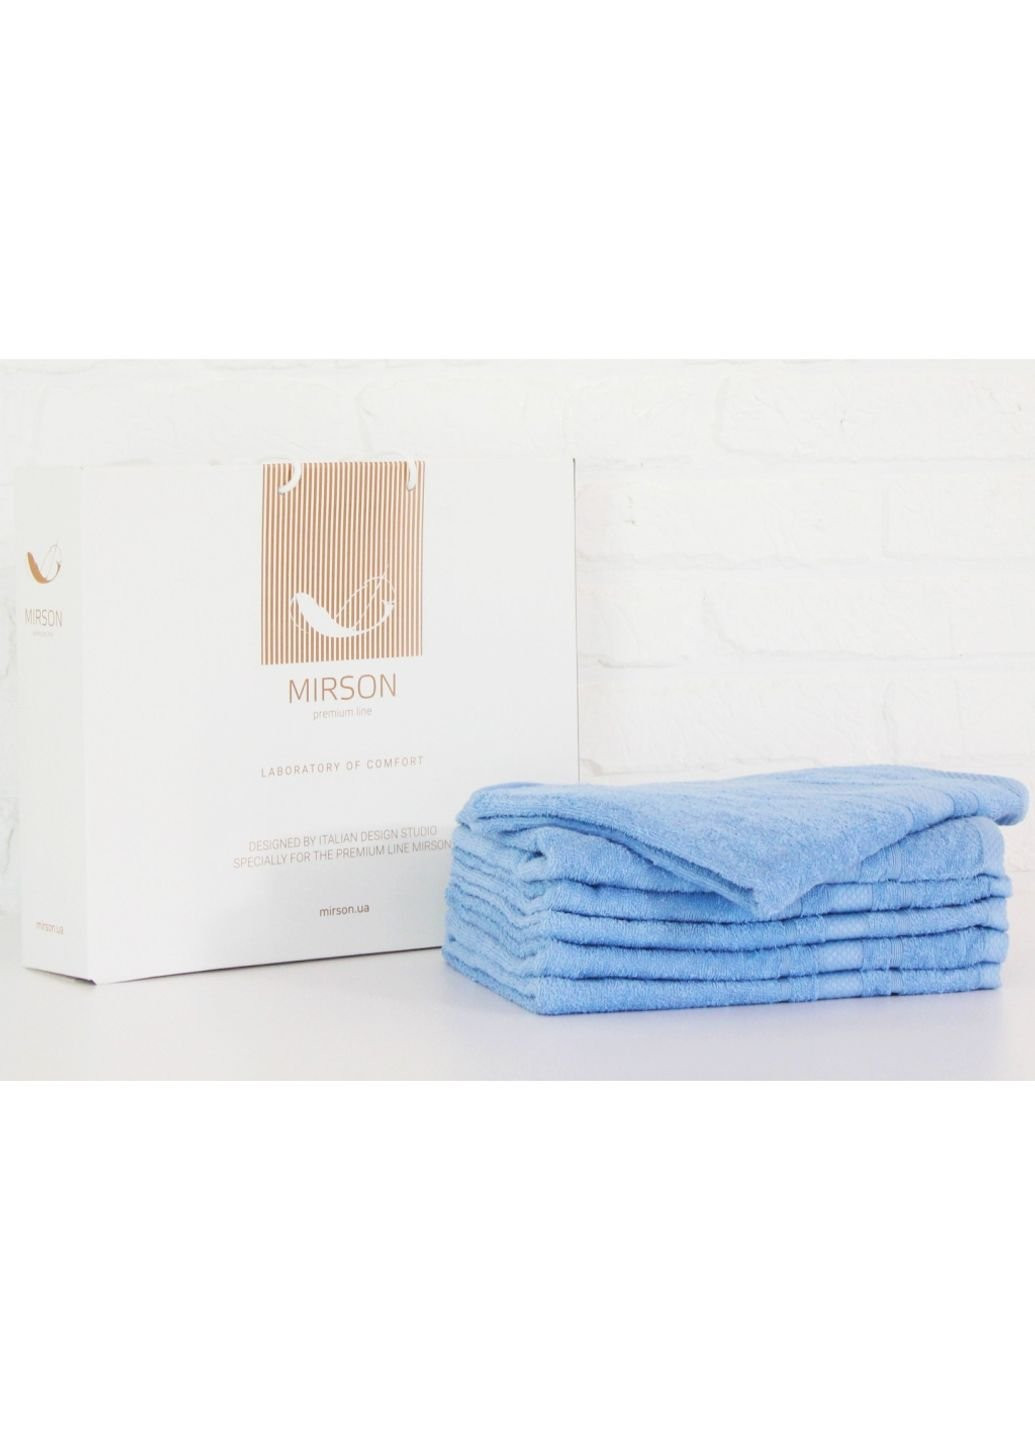 No Brand полотенце mirson набор банных №5072 elite softness cornflower 70х140 6 шт (2200003524123) голубой производство - Украина